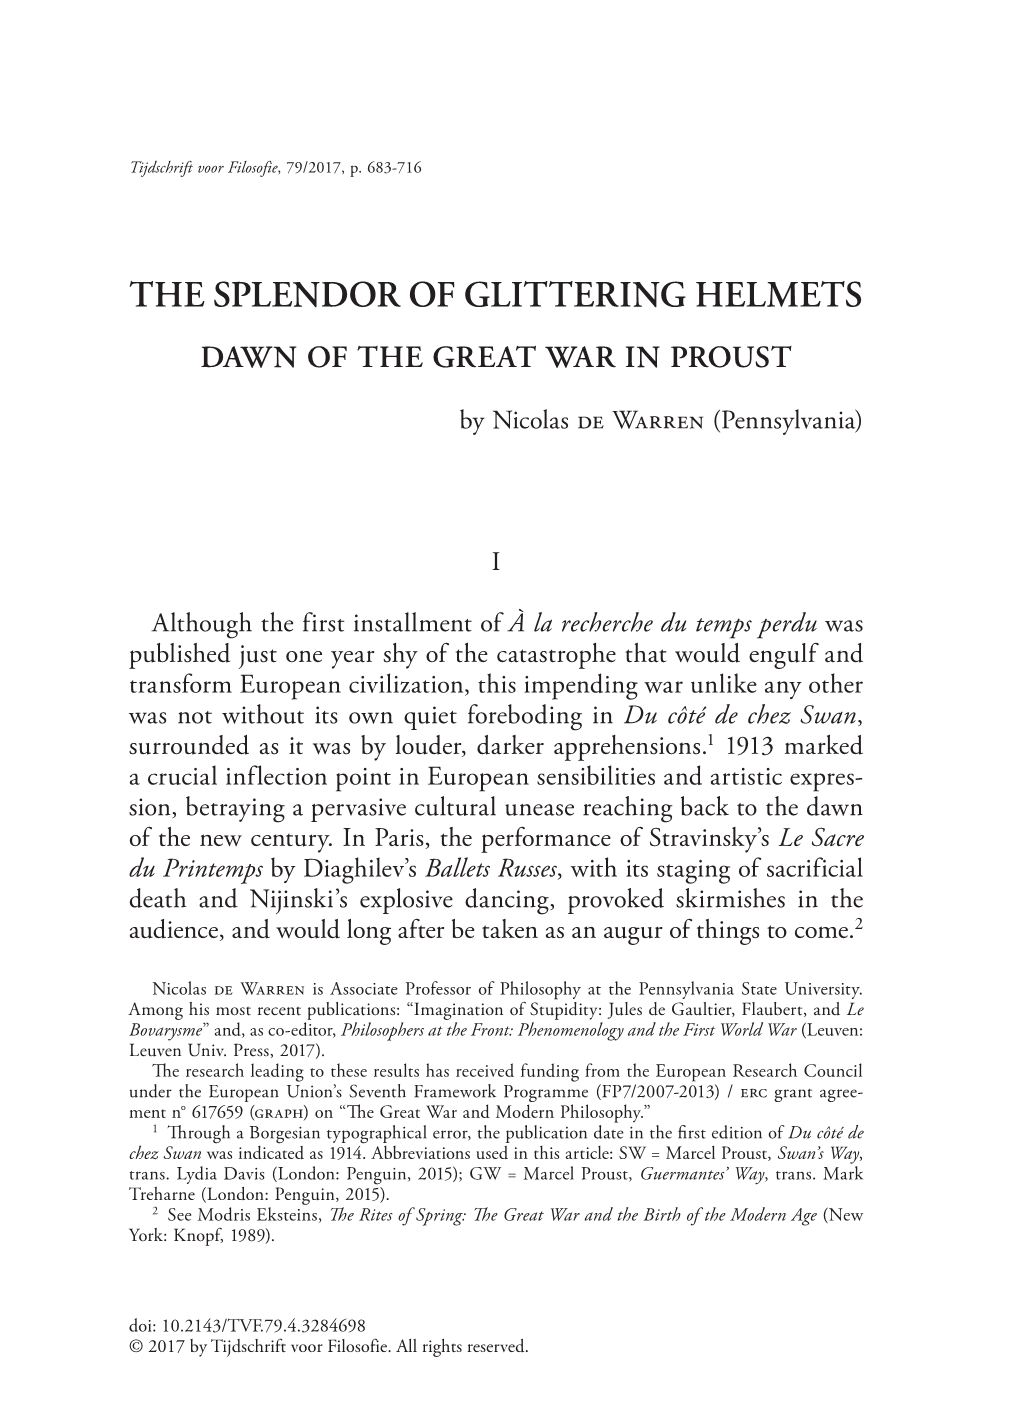 The Splendor of Glittering Helmets Dawn of the Great War in Proust